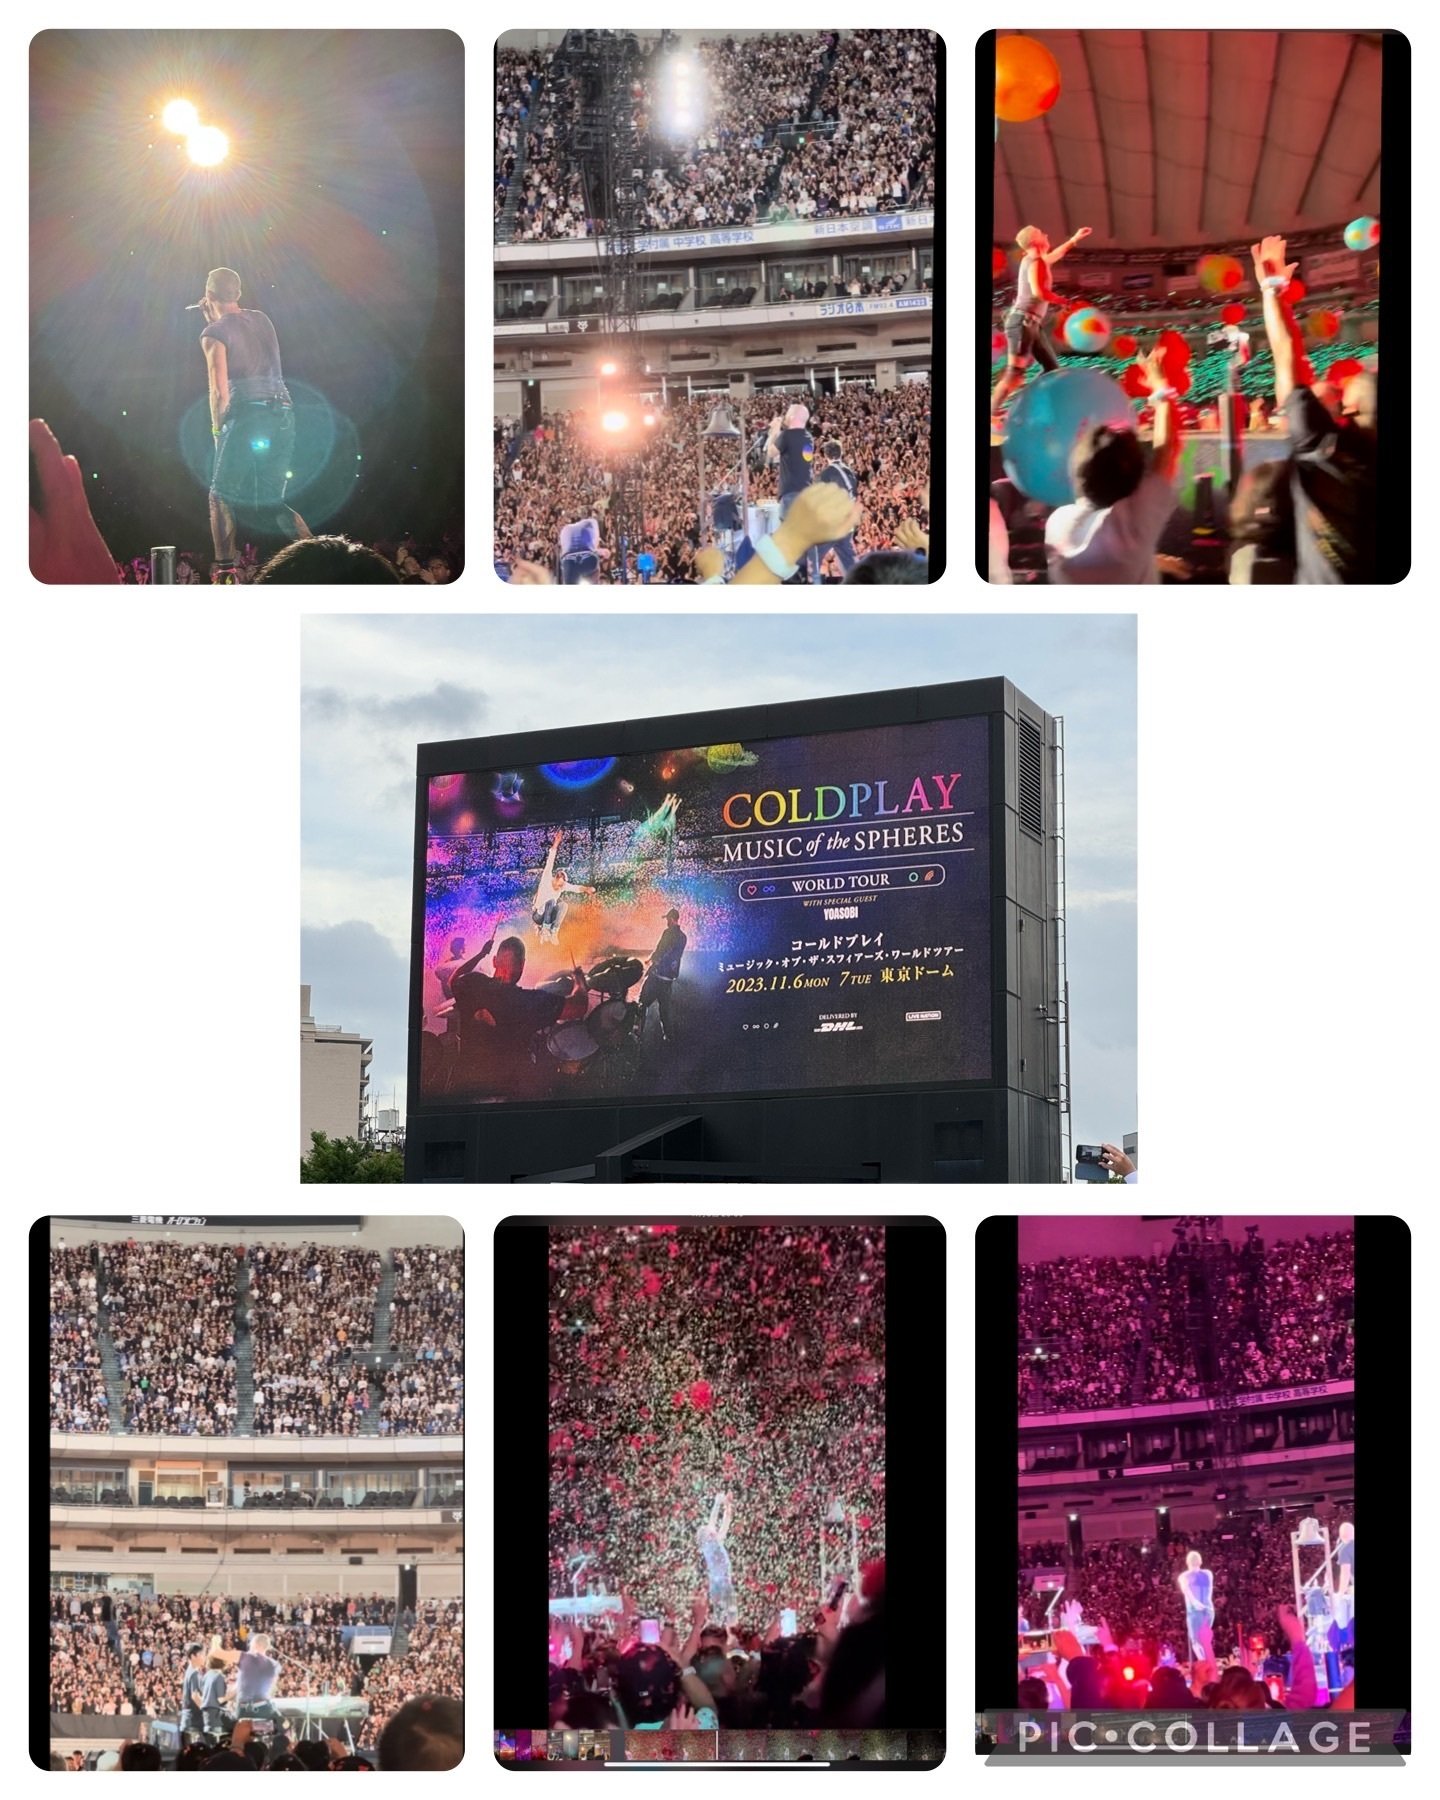 Coldplay WORLD TOUR 11/6 東京ドーム公演 チケット